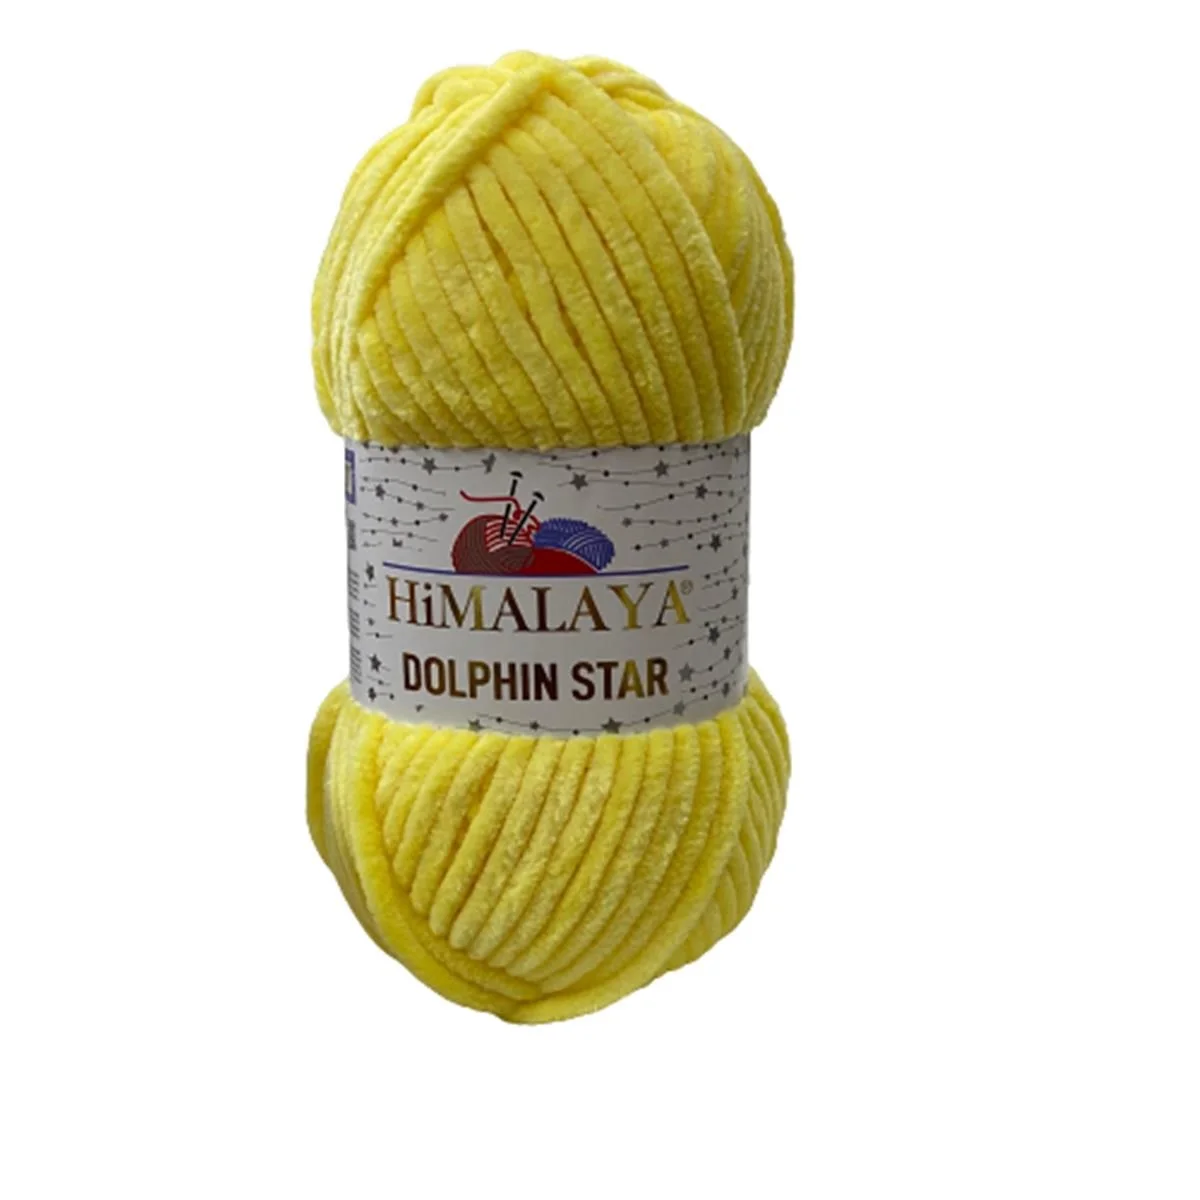 Himalaya Dolphin Baby Bulky Knitting Crochet Yarn 5 LOT/BALLS 100g